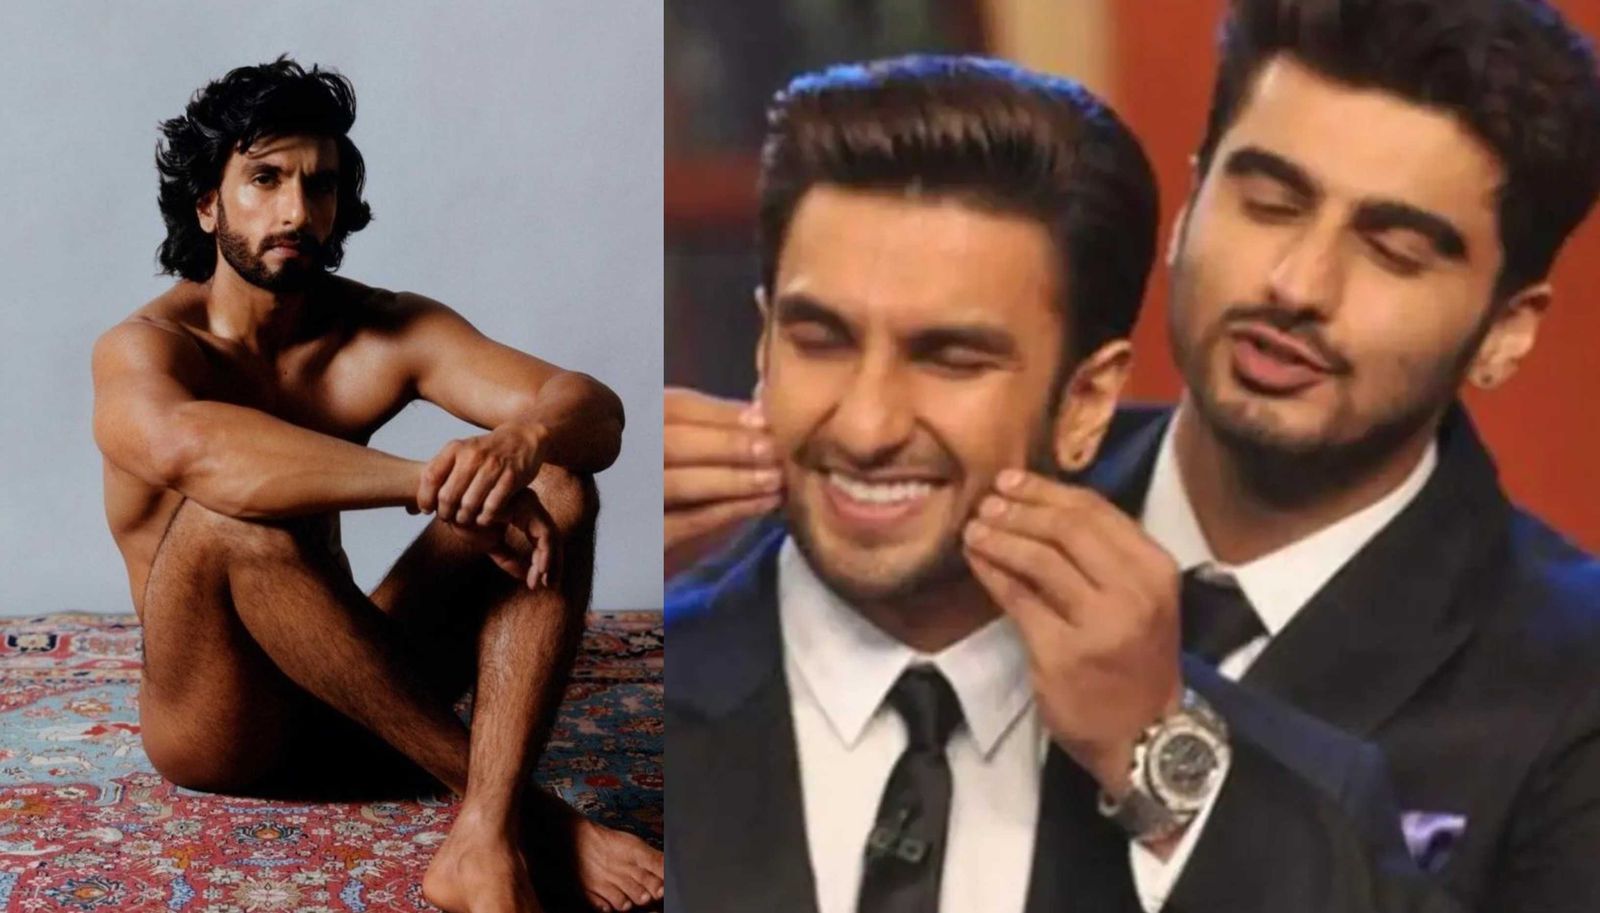 Arjun Kapoor reacts to Ranveer Singh’s nude photo-shoot: ‘He is that way; he's making people happy’